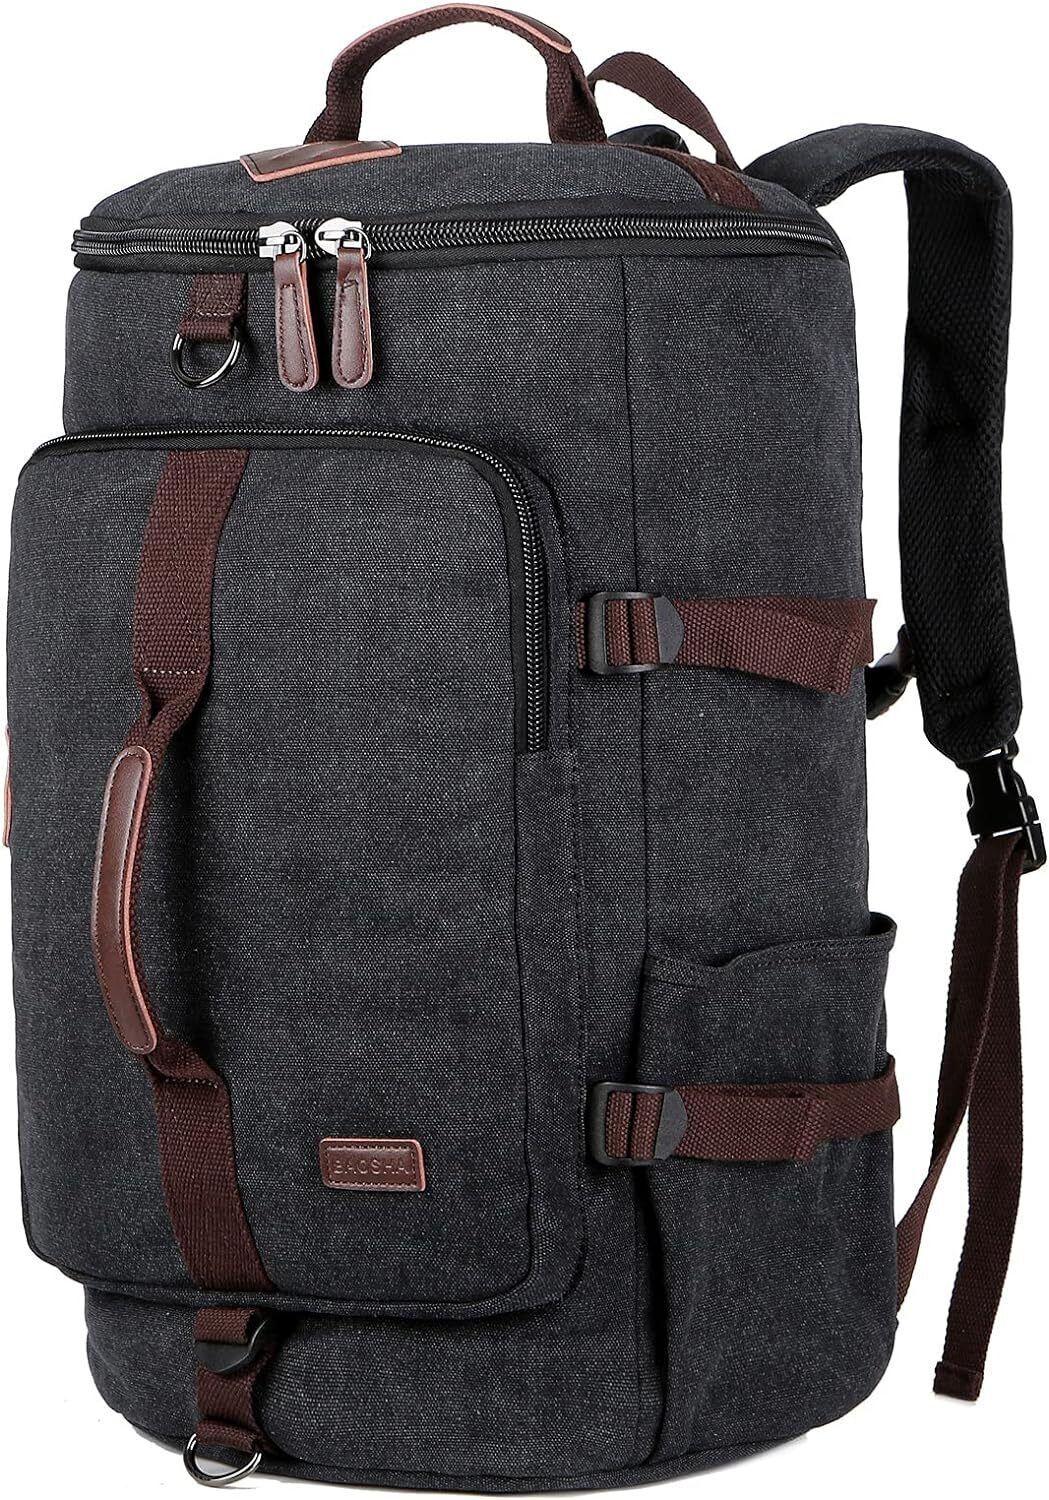 BAOSHA Canvas Weekender Travel Duffel Backpack Hybrid Hiking Rucksack Black 